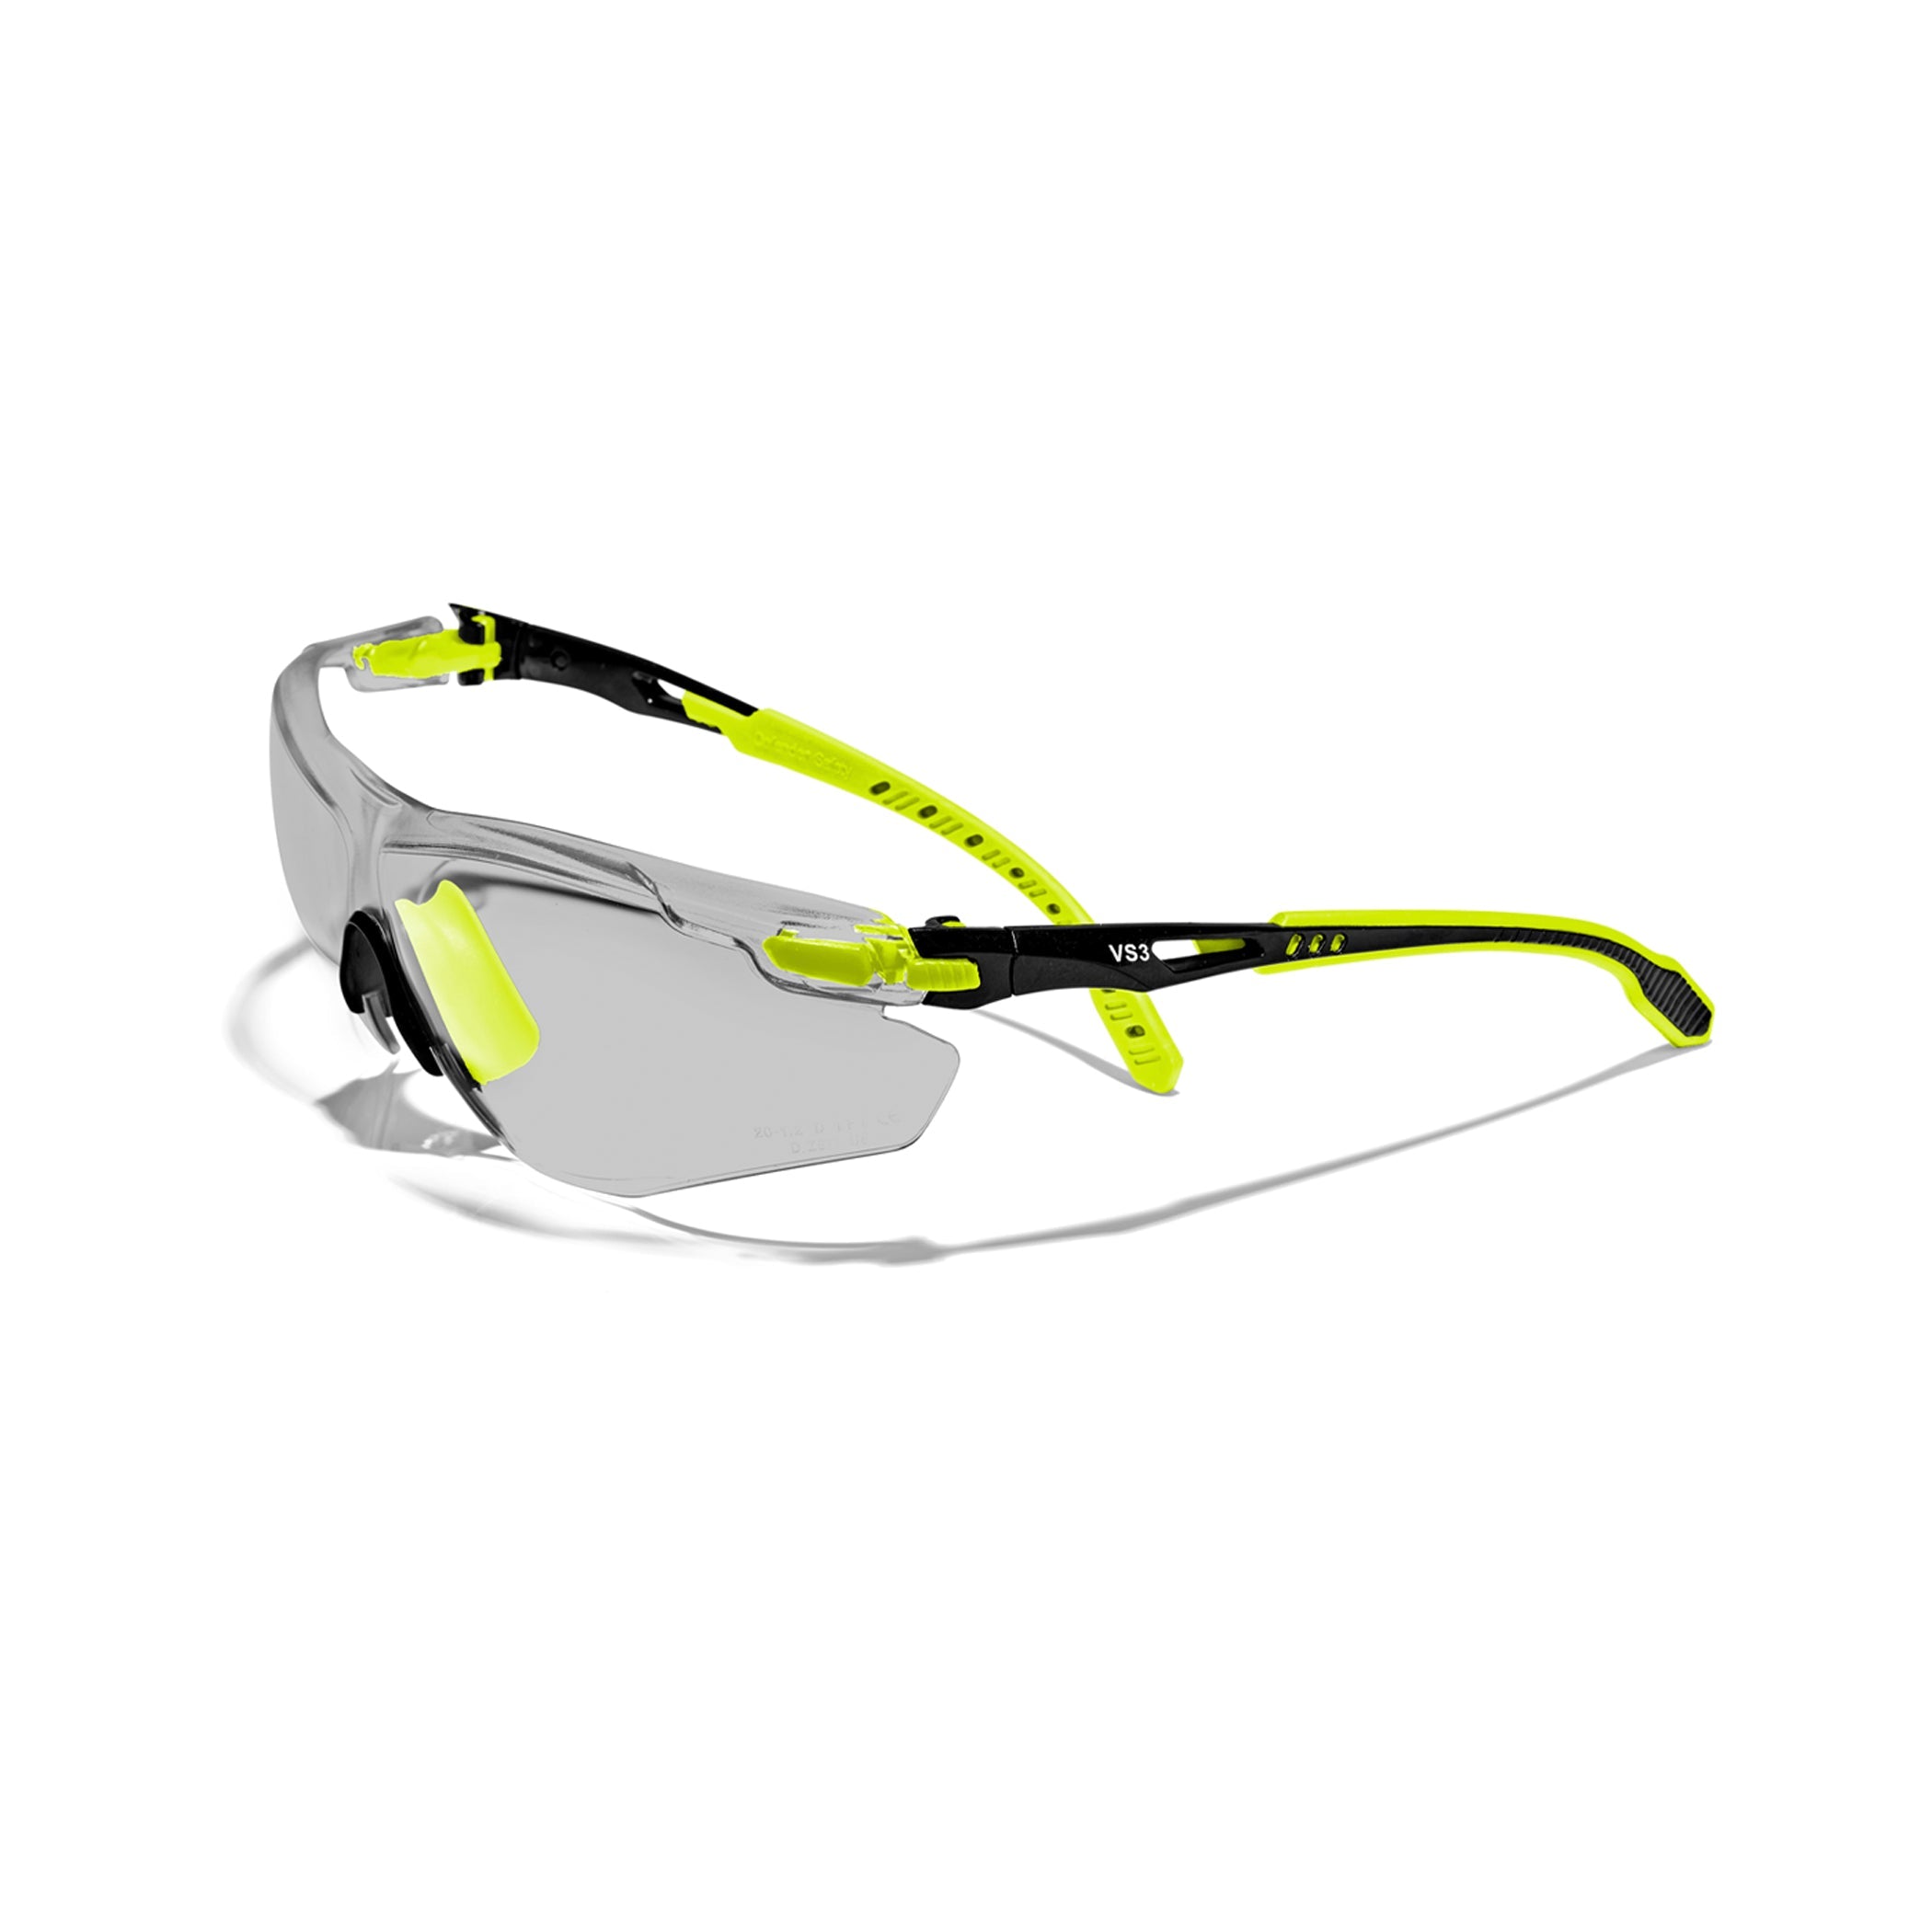 Optifense VS3 Anti Fog, Premium Smoked Safety Glasses, ANSI Z87+ (Color: Safety Yellow)